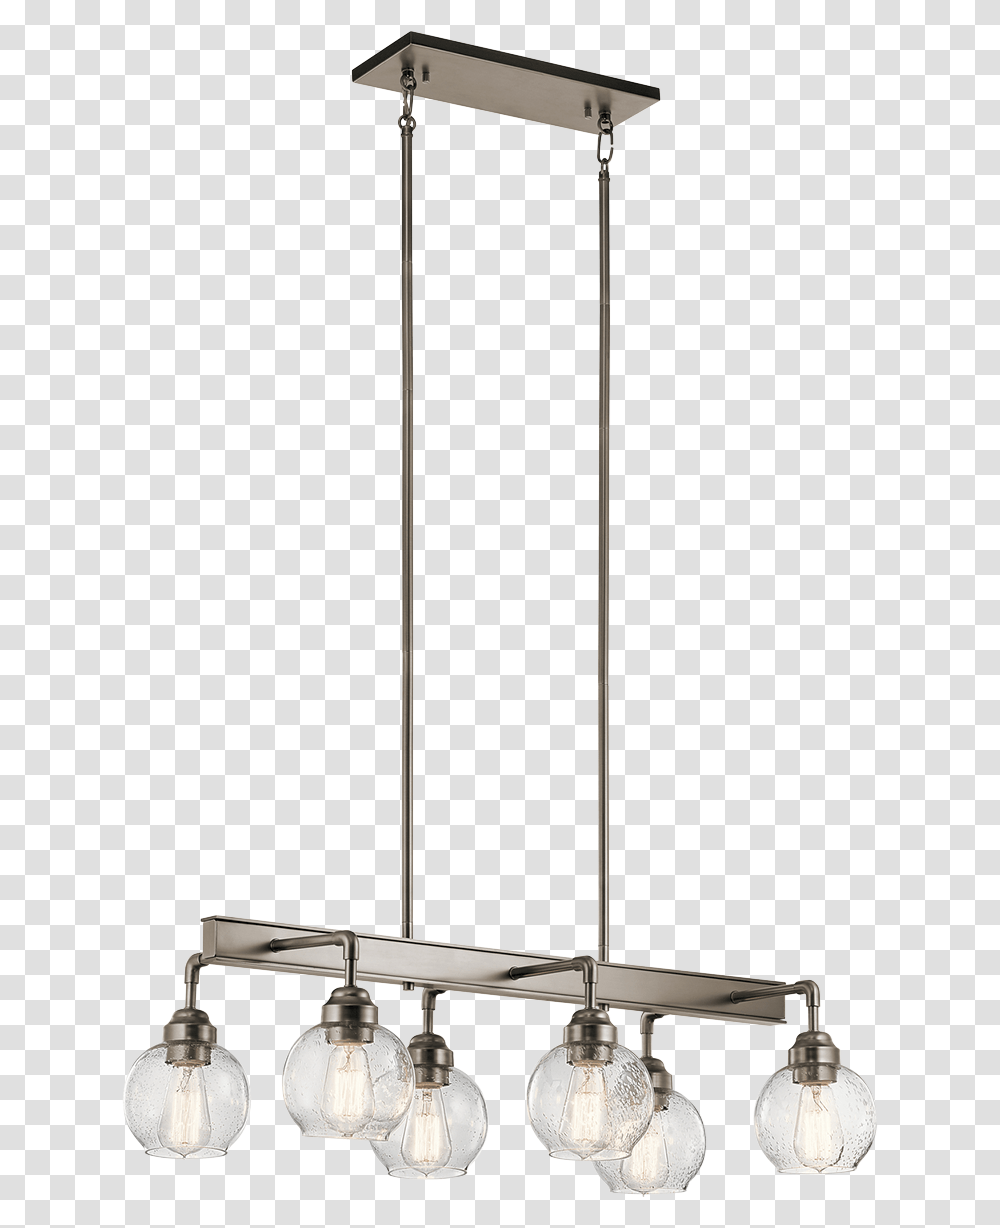 Chandelier, Lamp, Utility Pole, Lighting, Lamp Post Transparent Png